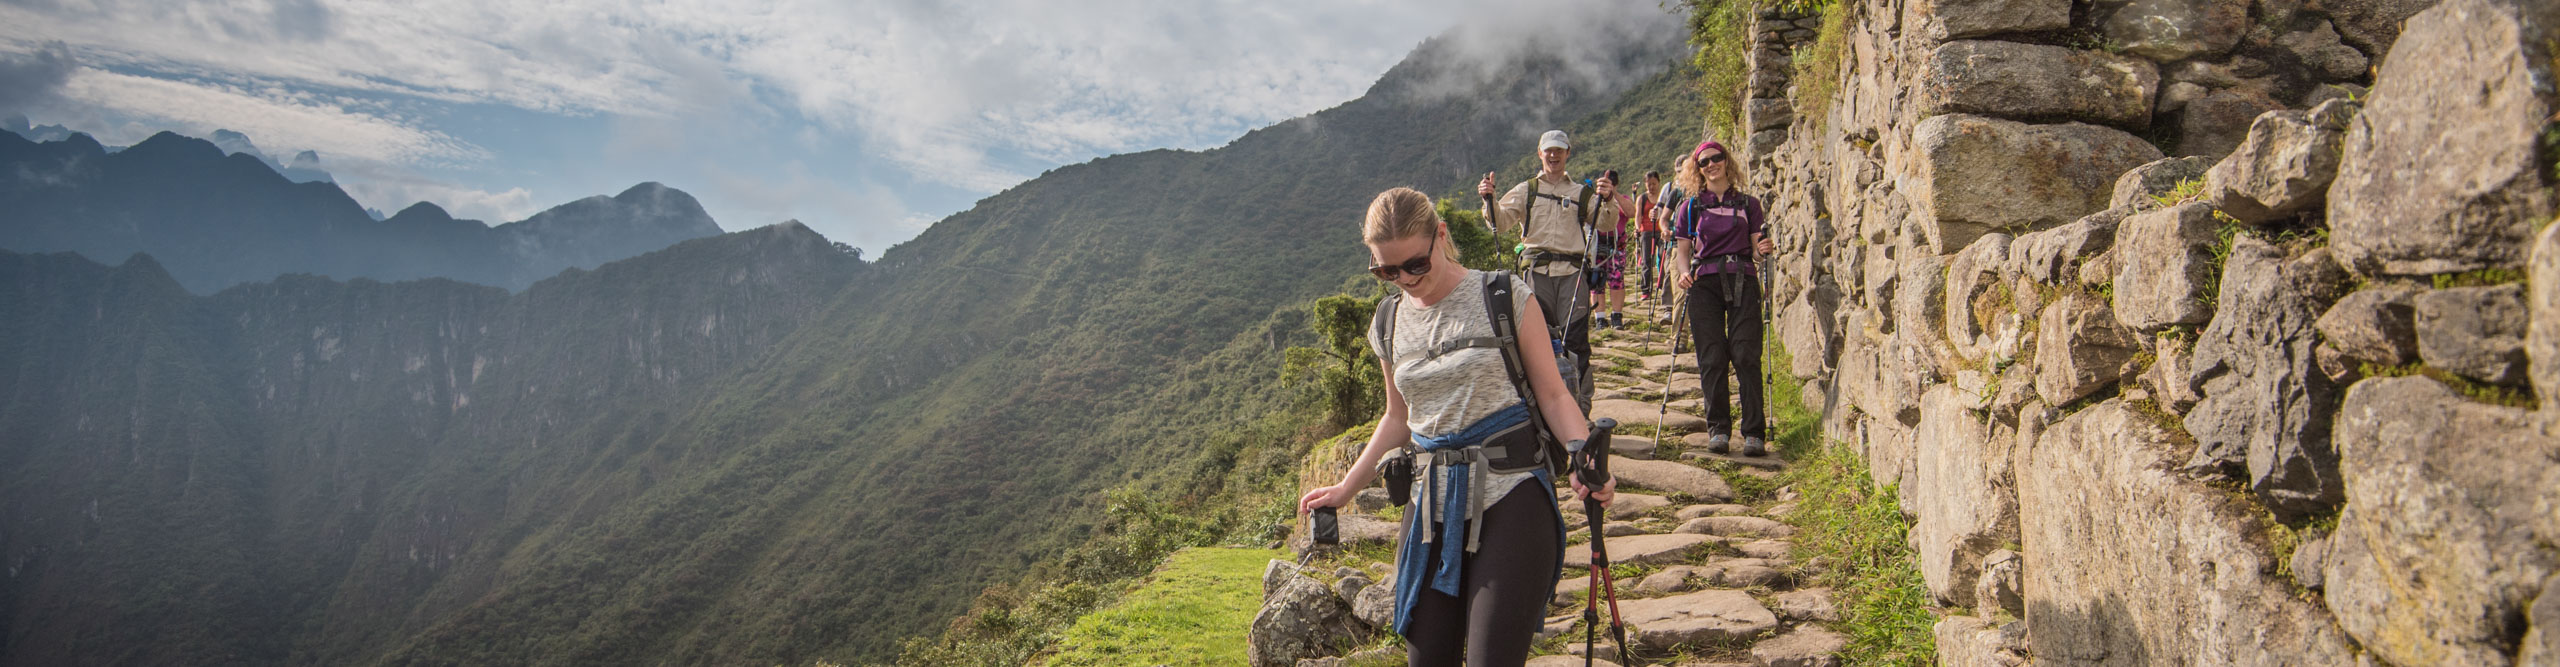 Travellers walking along the Inca Trail on the way to Machu Picchu, Peru